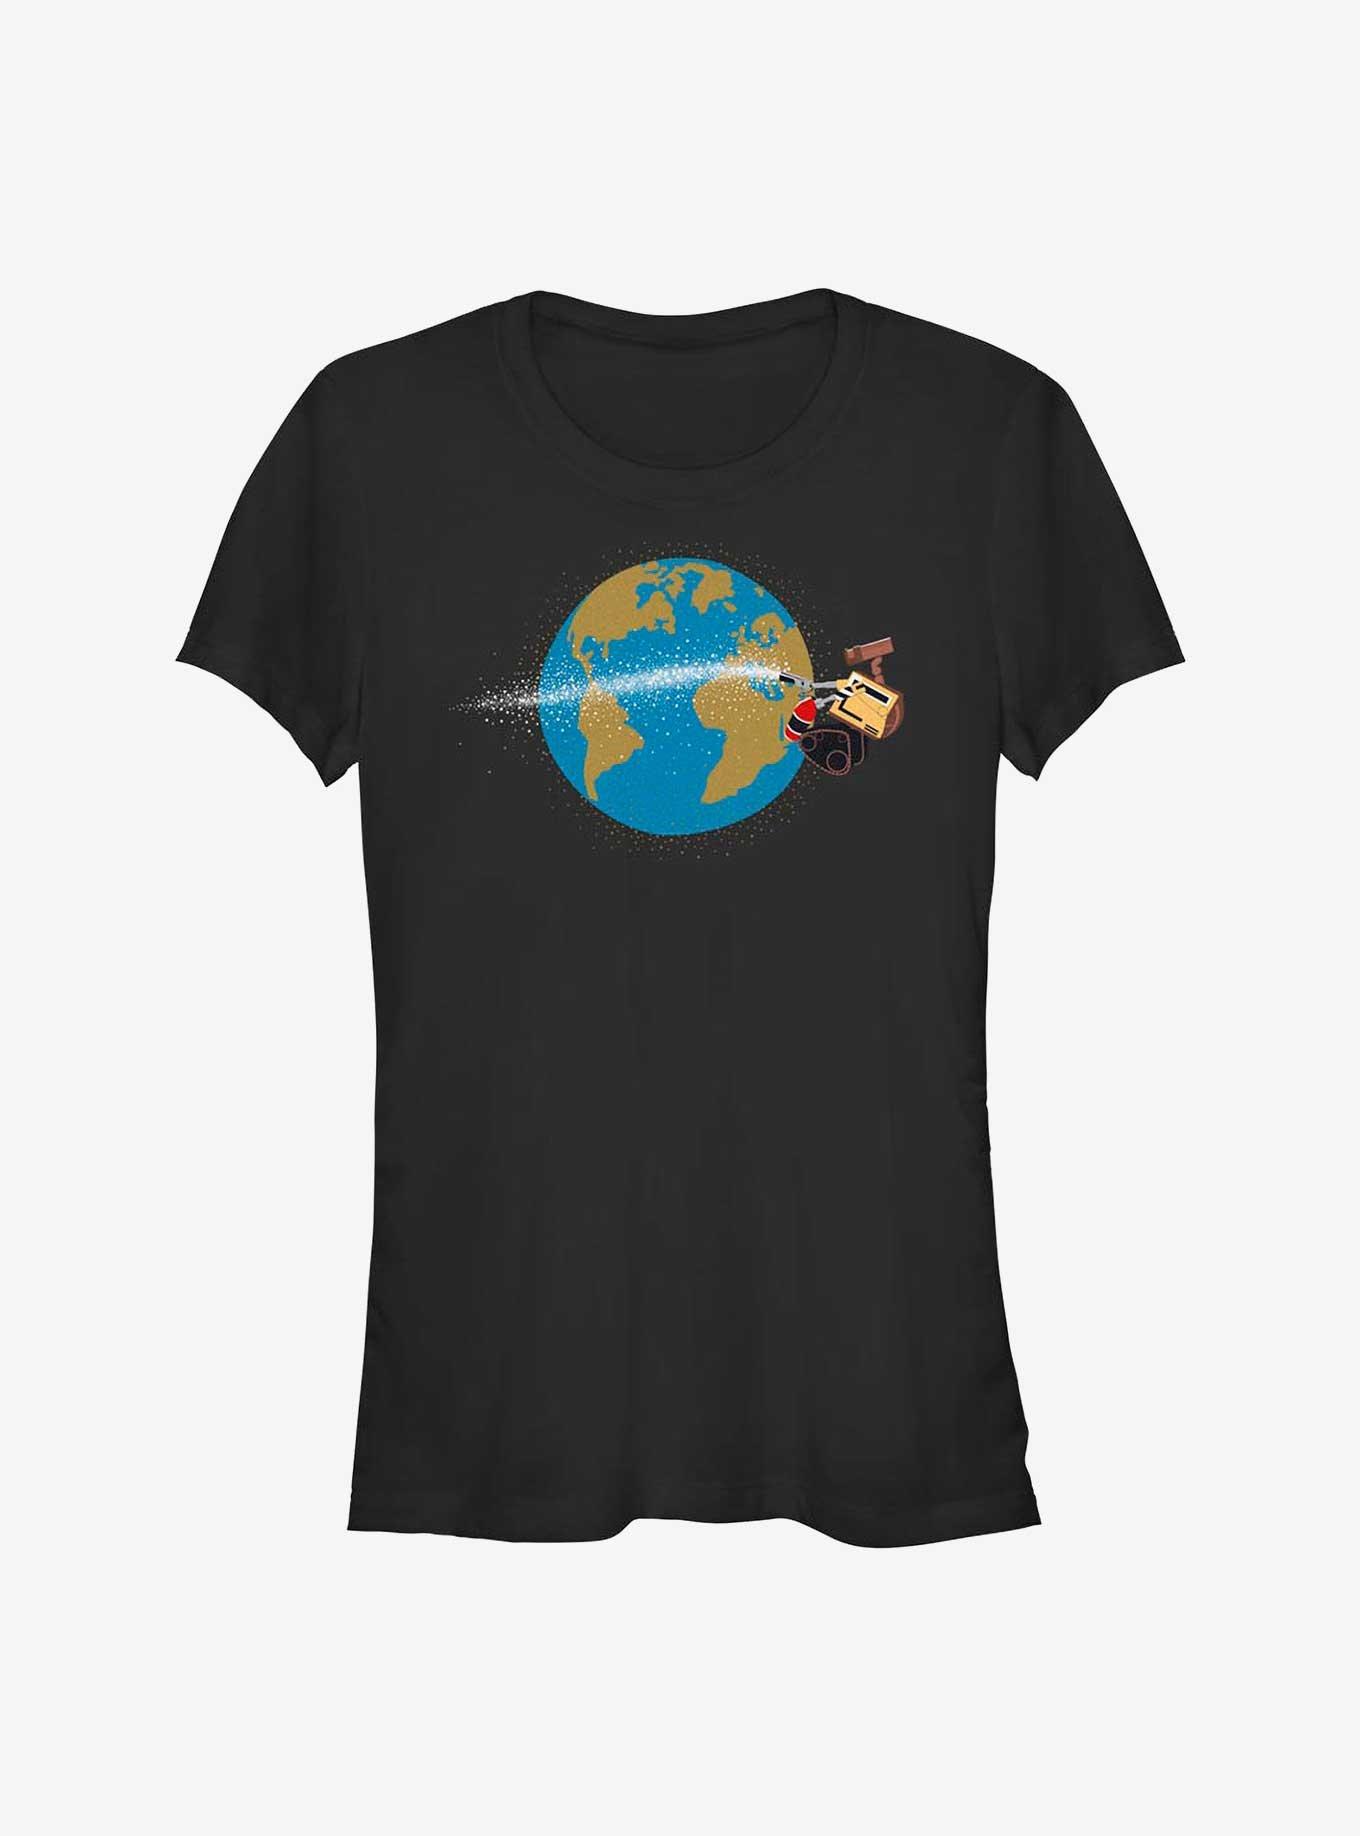 Disney Pixar Wall-E Earth Day Space Extinguisher Girls T-Shirt